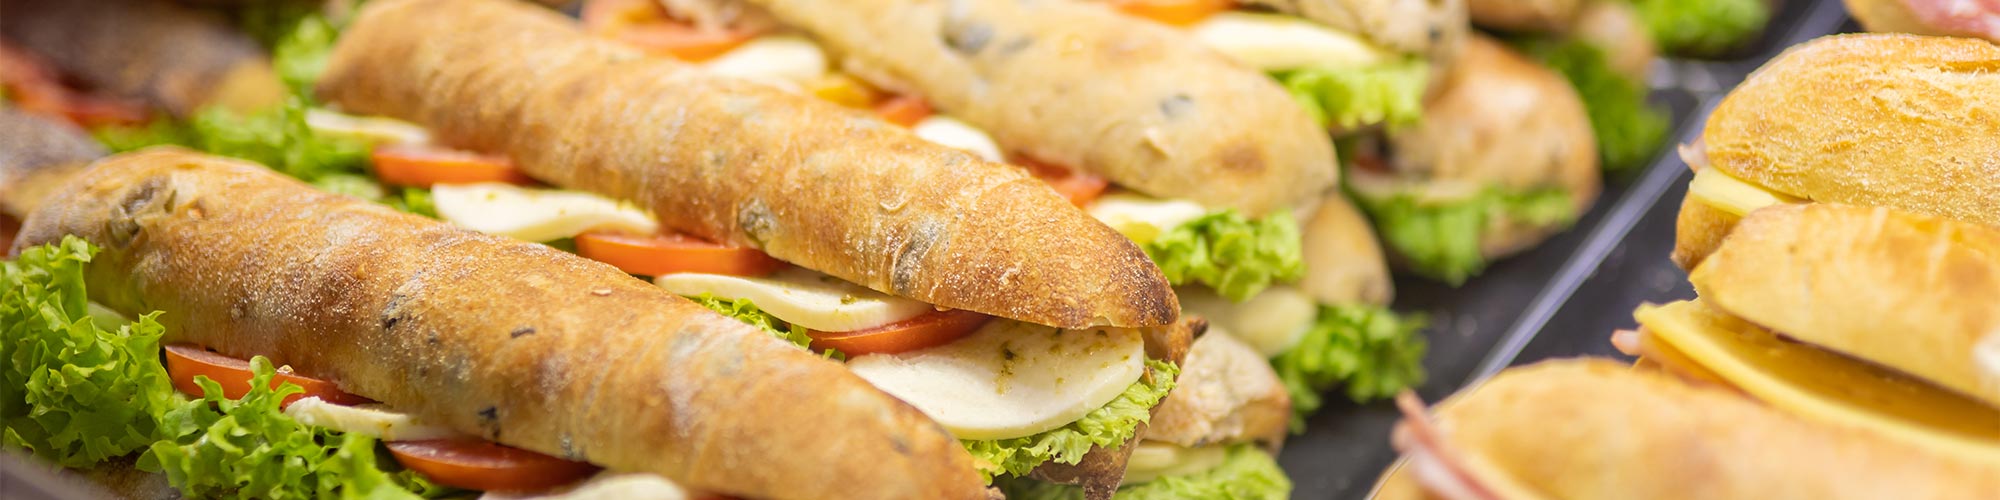 Catered Ham, Turkey, Cheese, & Italian Sub Sandwiches